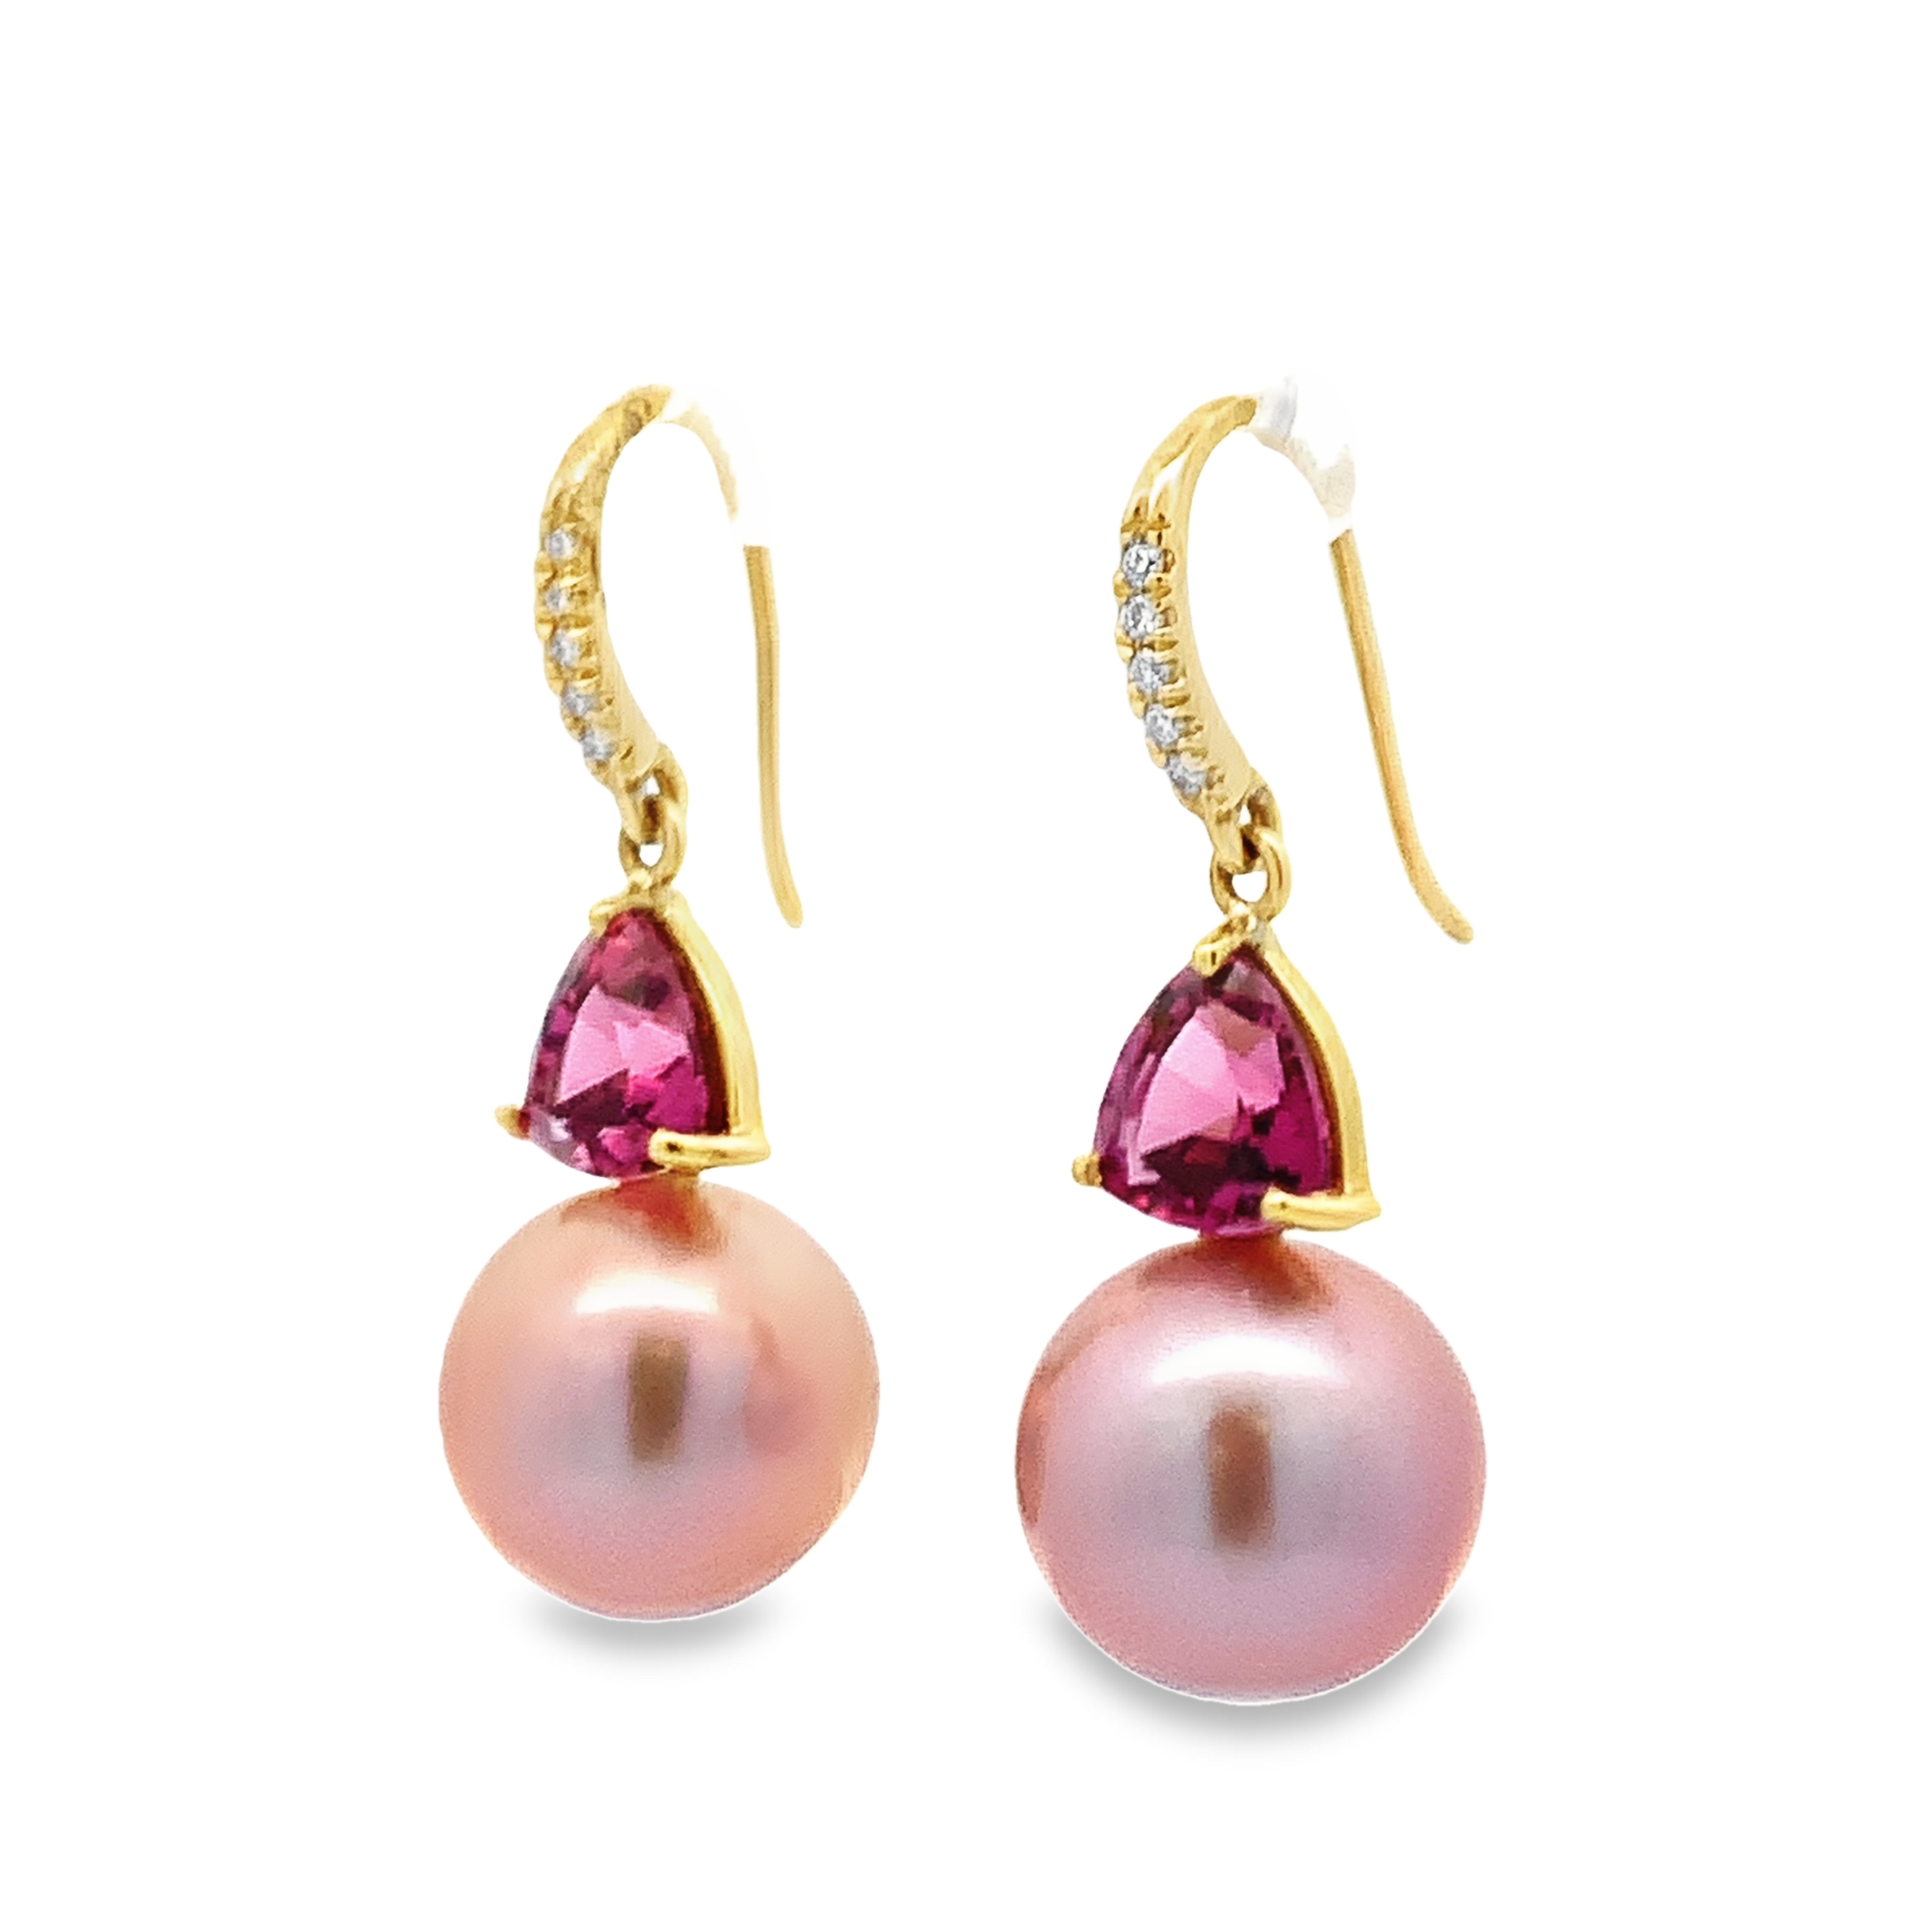 Lauren K 18K Yellow Gold Pink Pearl and Garnet Earrings